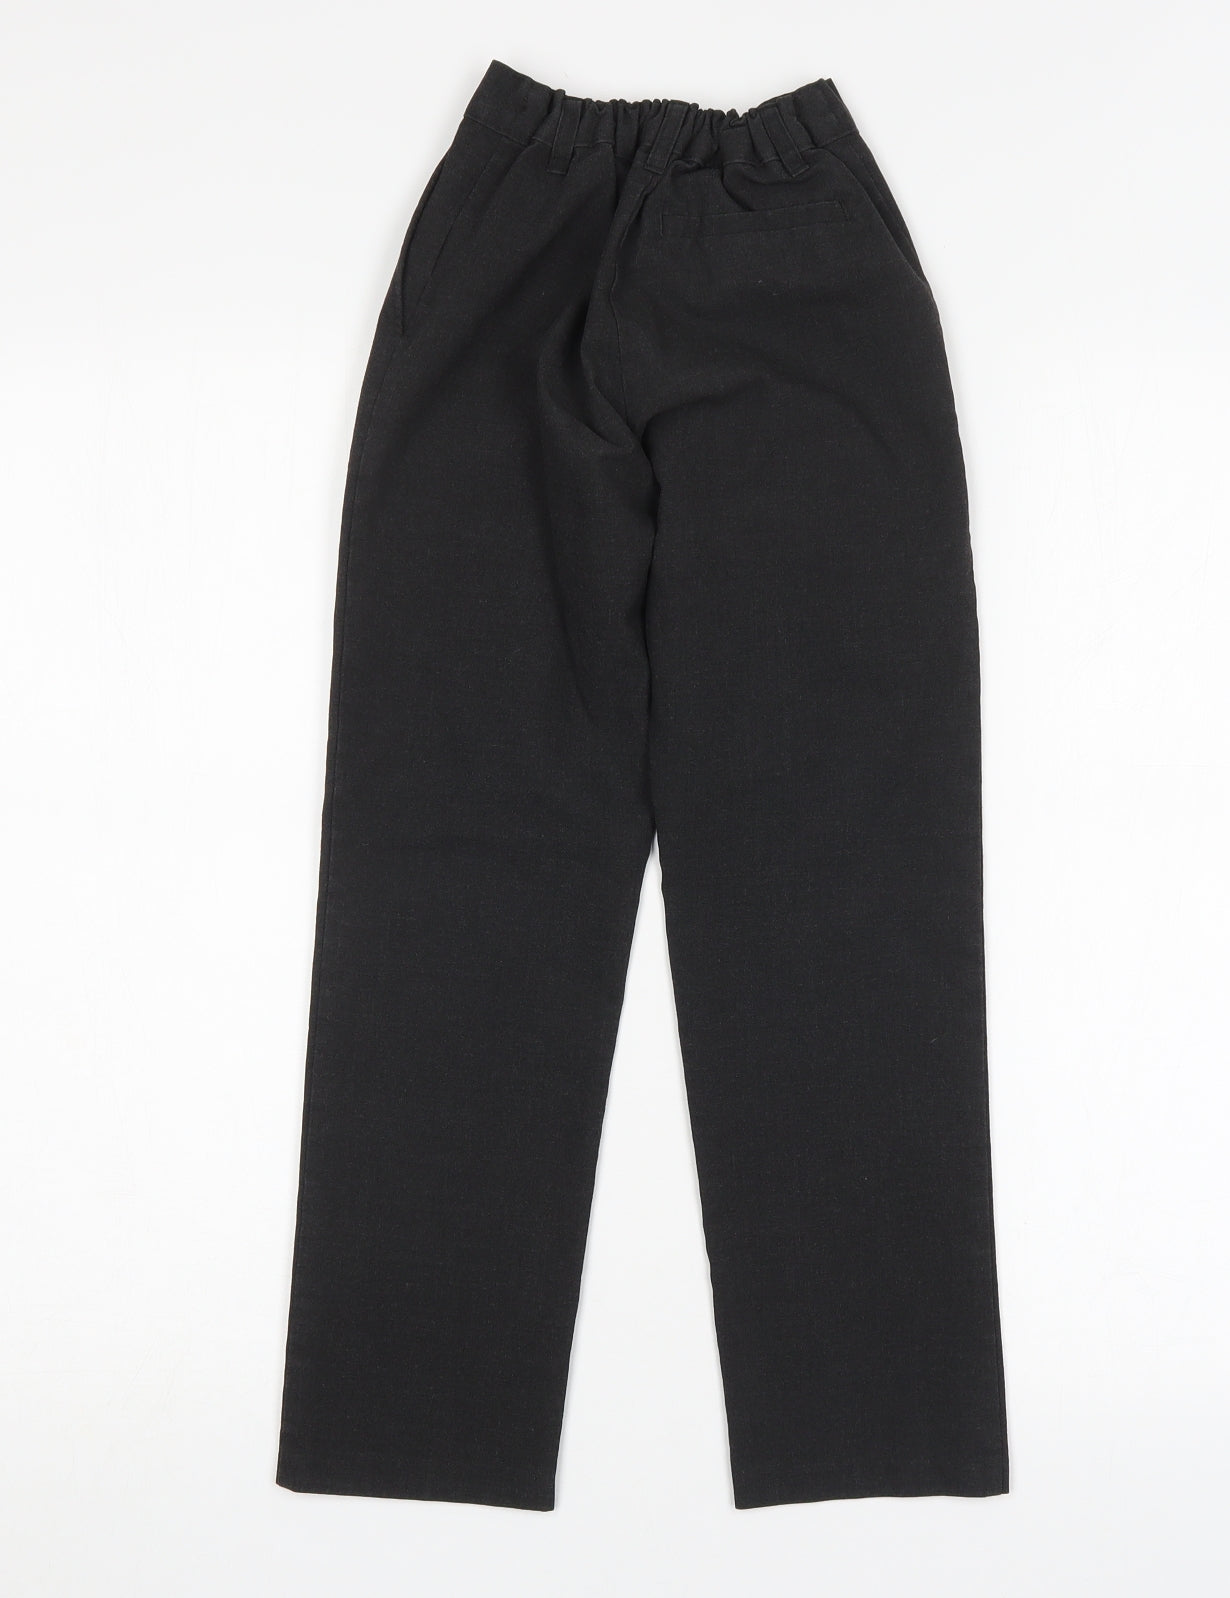 M&S Boys Grey  Polyester Dress Pants Trousers Size 8-9 Years  Regular  - School Wear